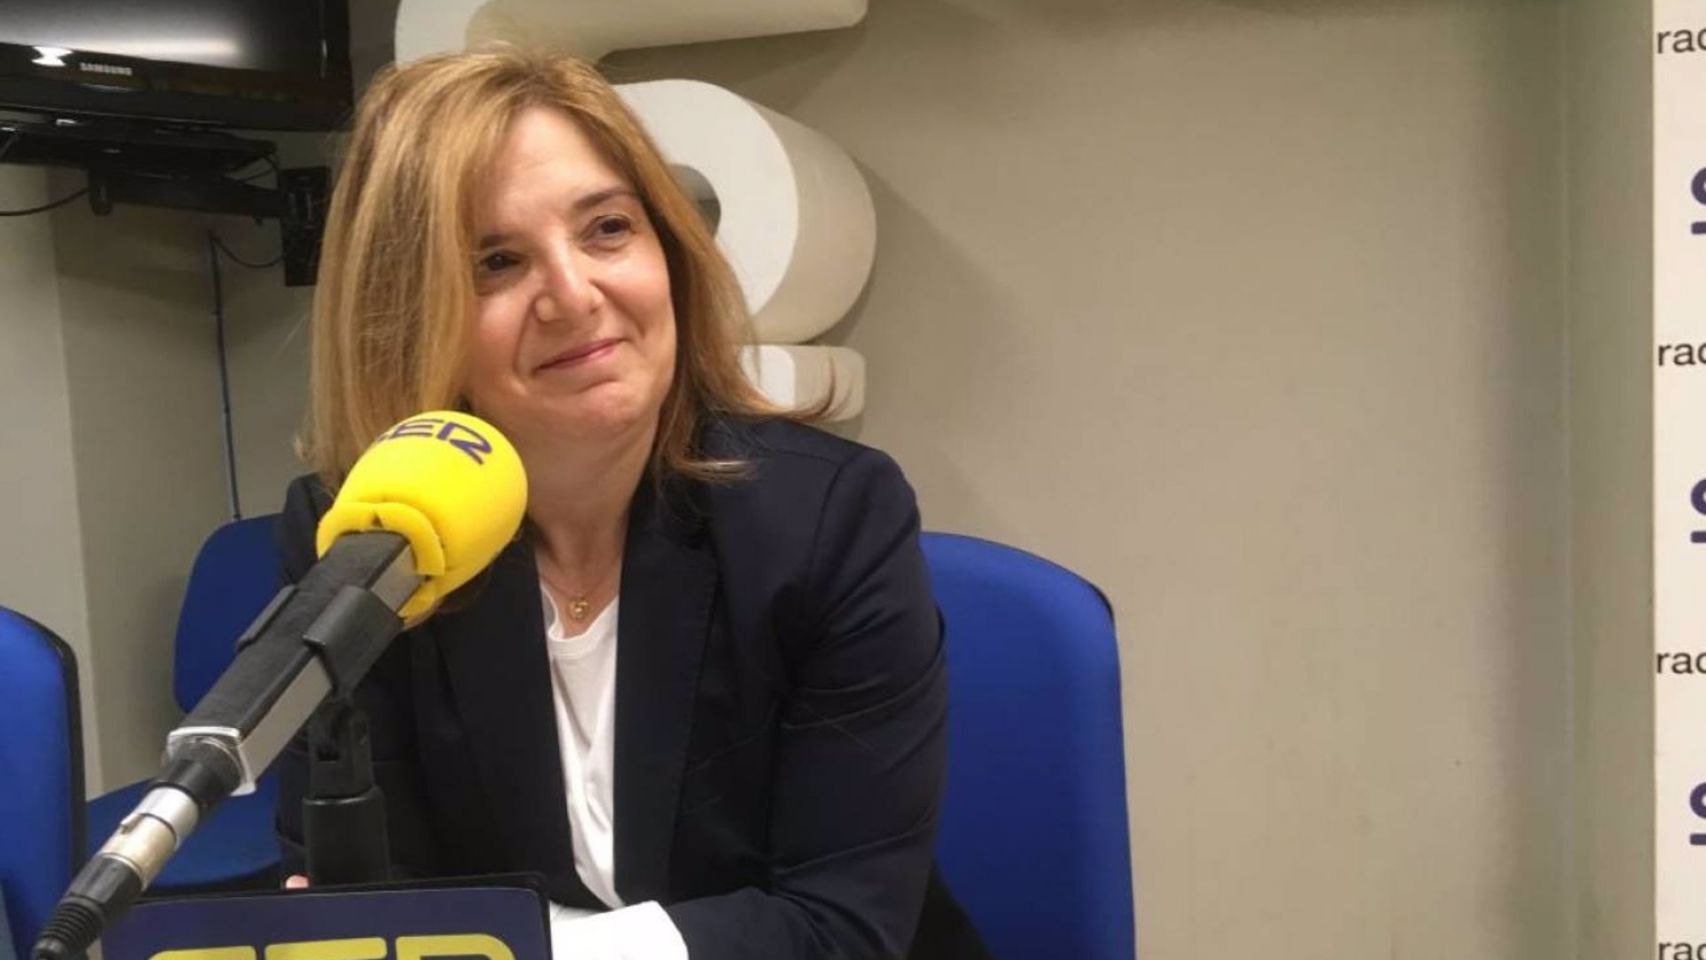 La diputada del PSOE Pilar Cancela en una entrevista a la Cadena Ser.